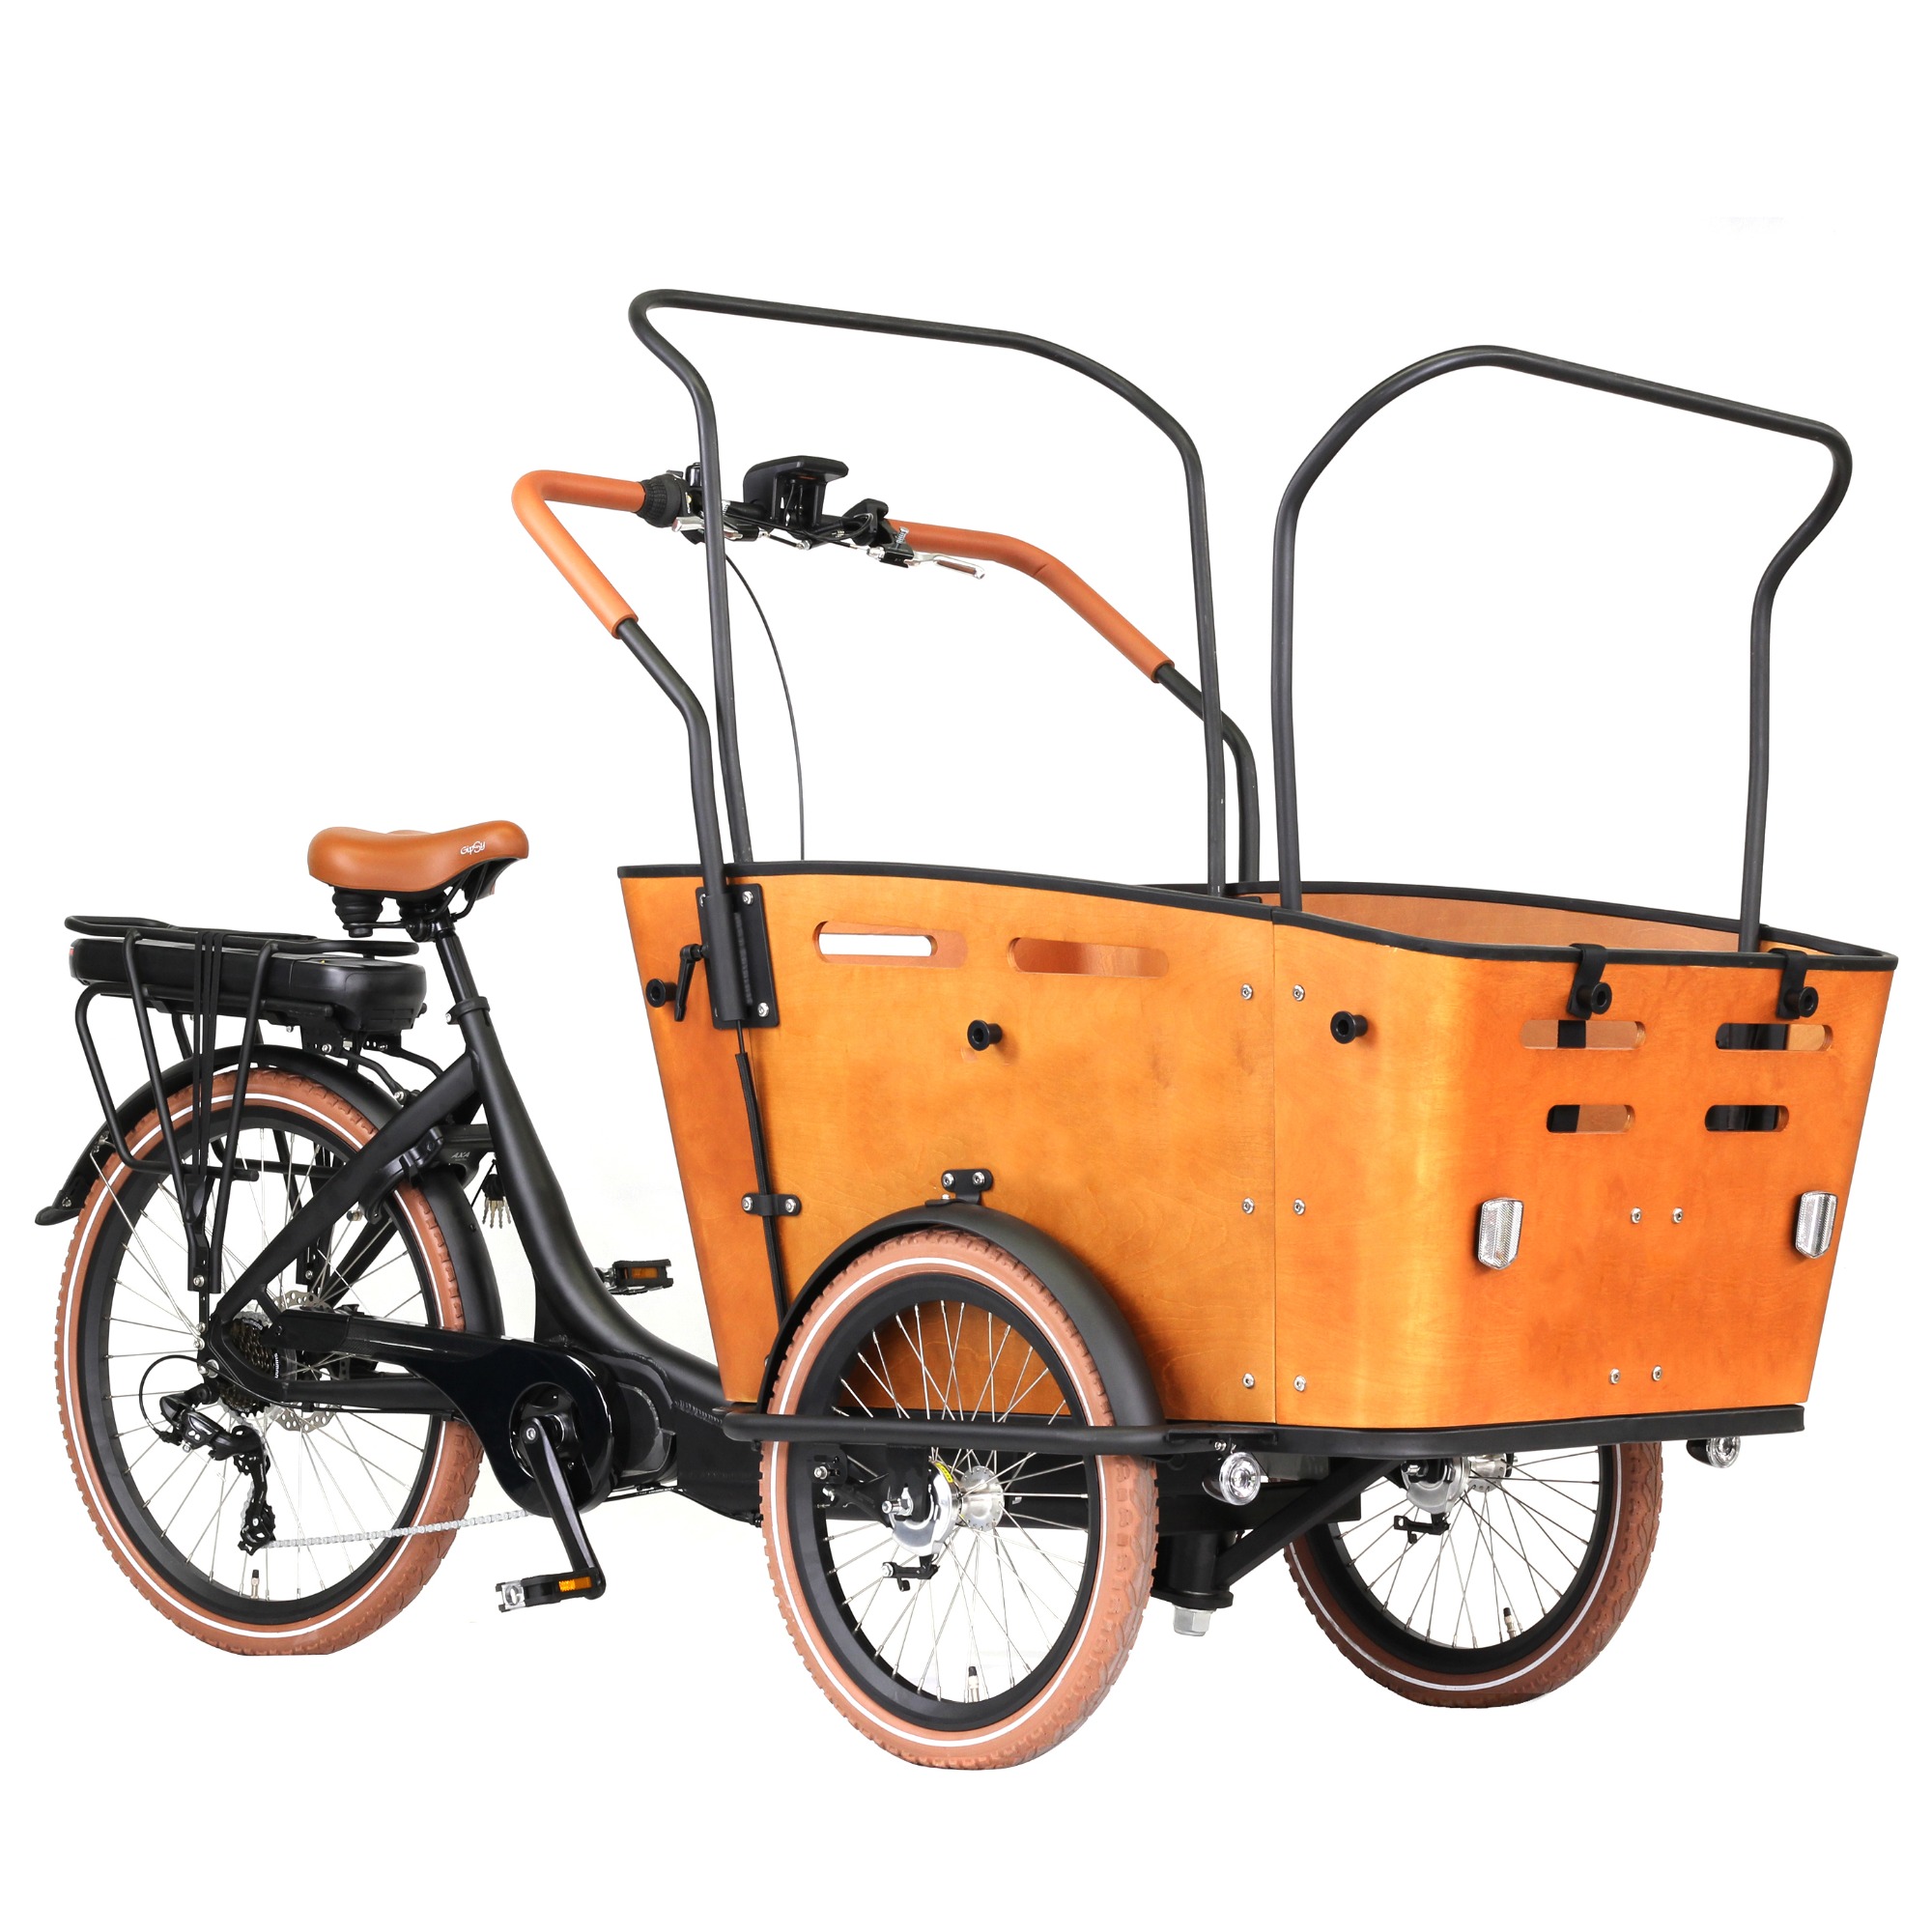 Should I choose a two-wheel or three-wheel cargo bike?